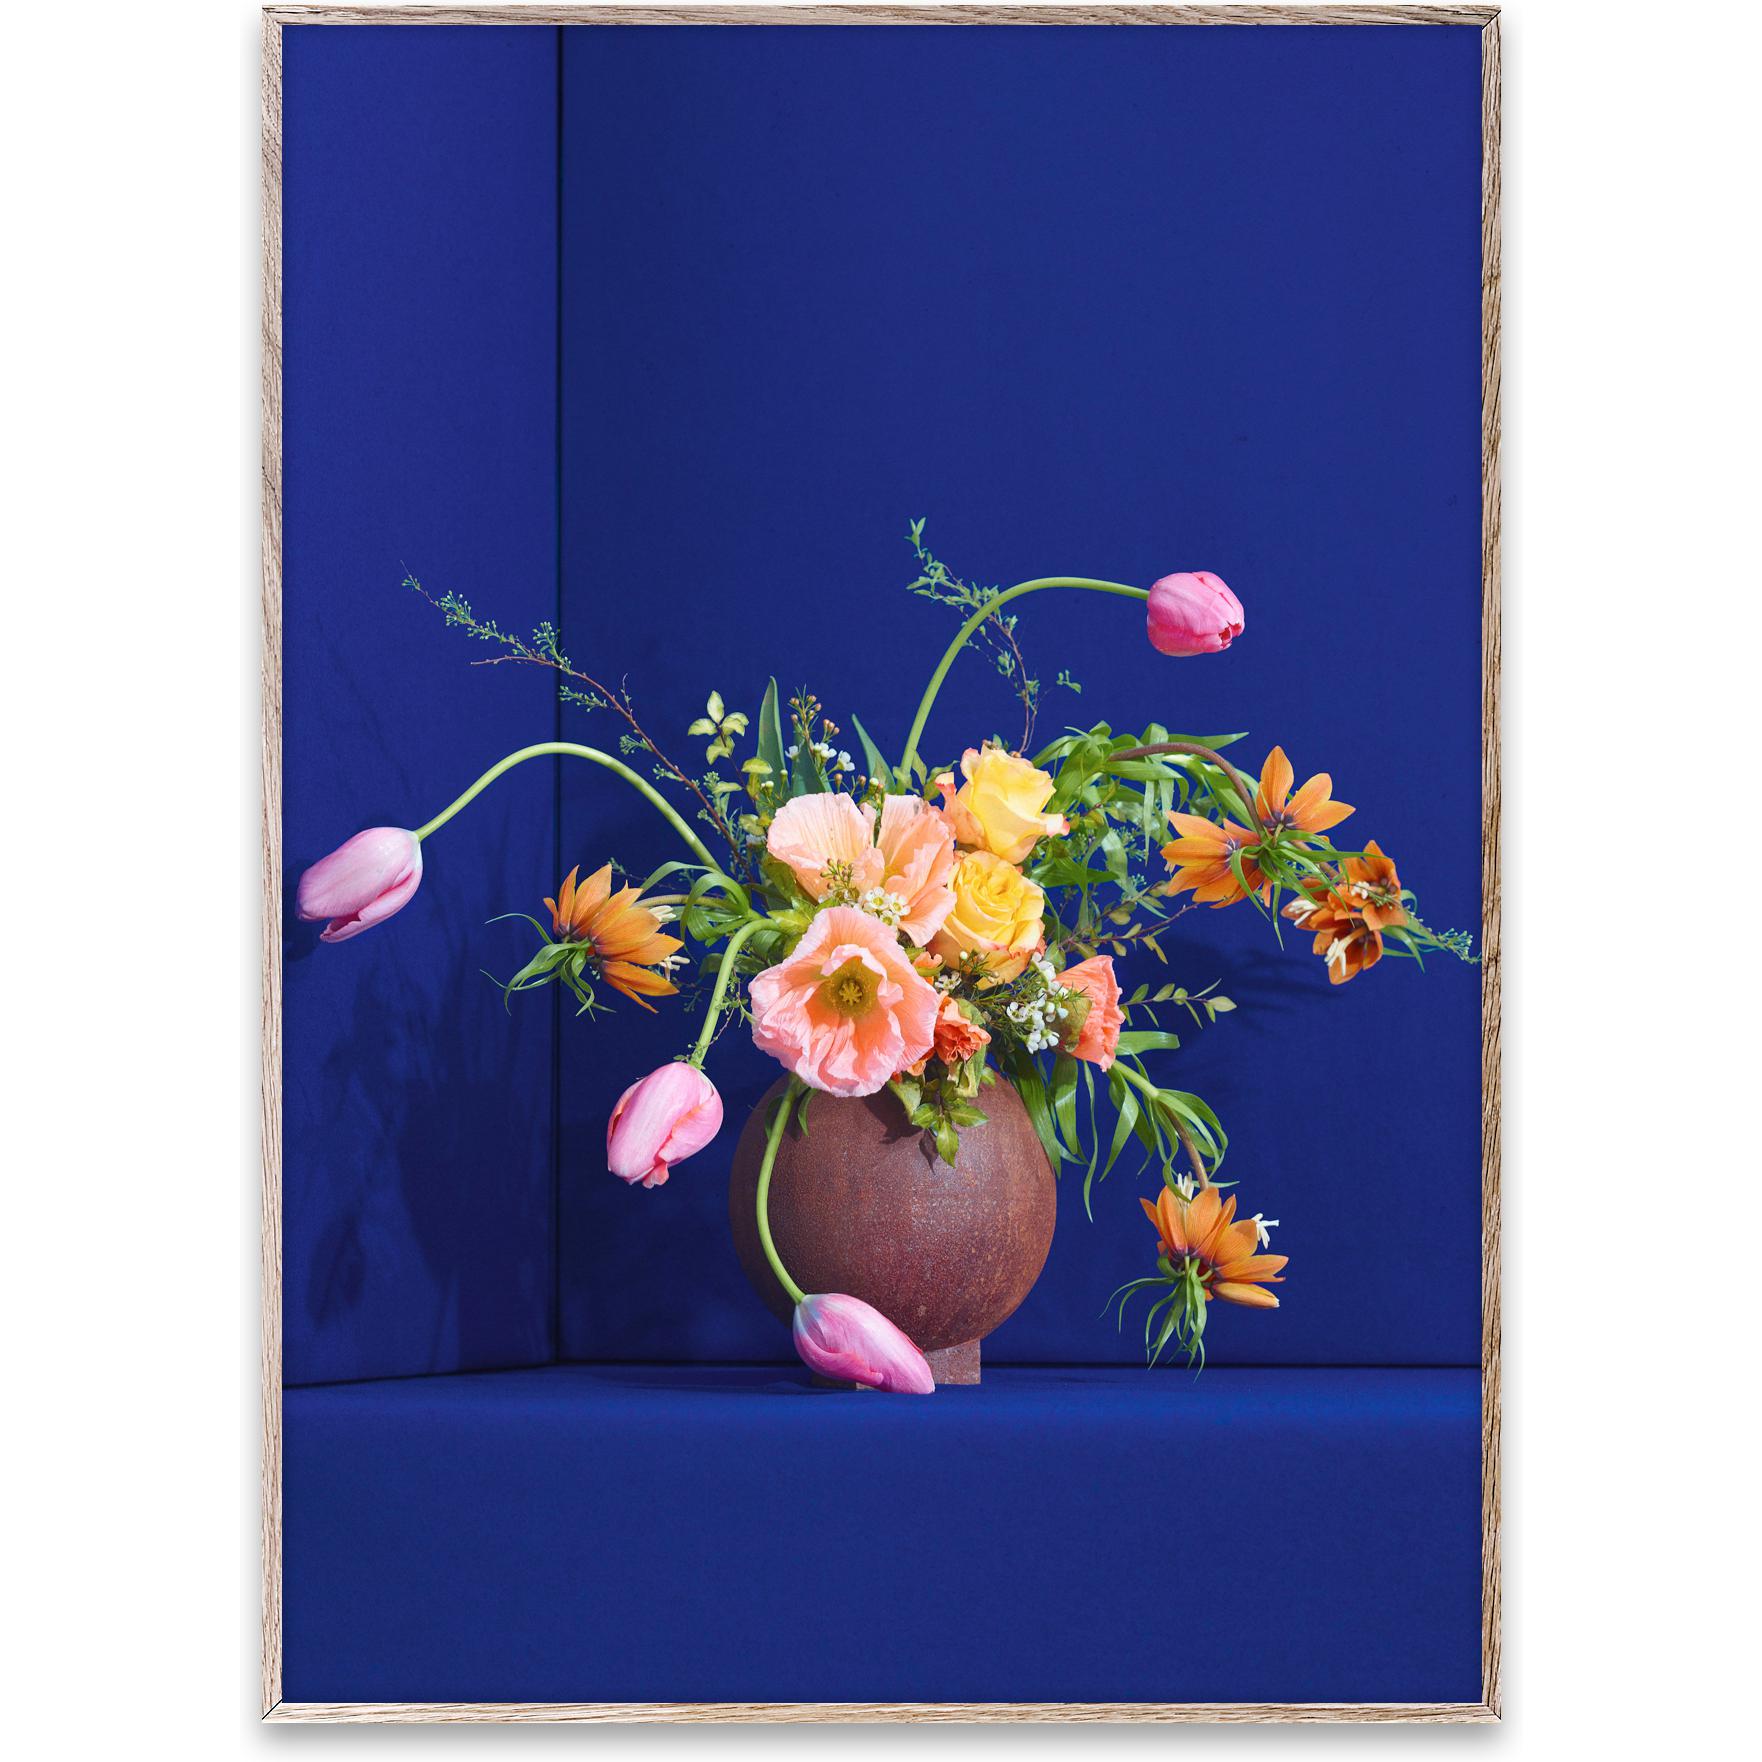 Paper Collective Blomst 01 Poster 70x100 Cm, Blau